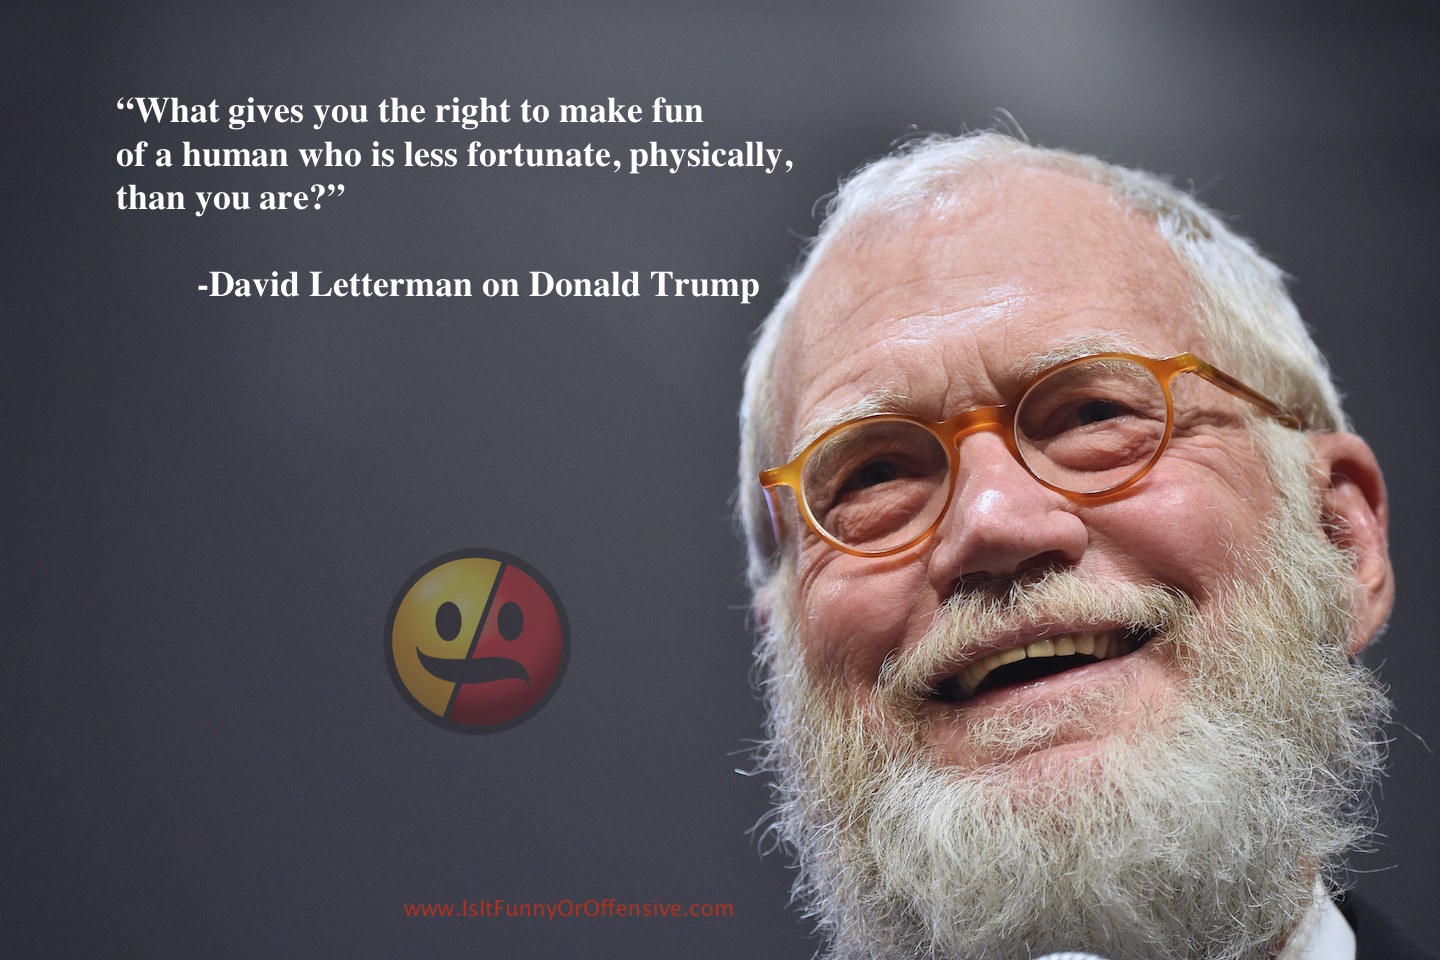 David Letterman on Donald Trump